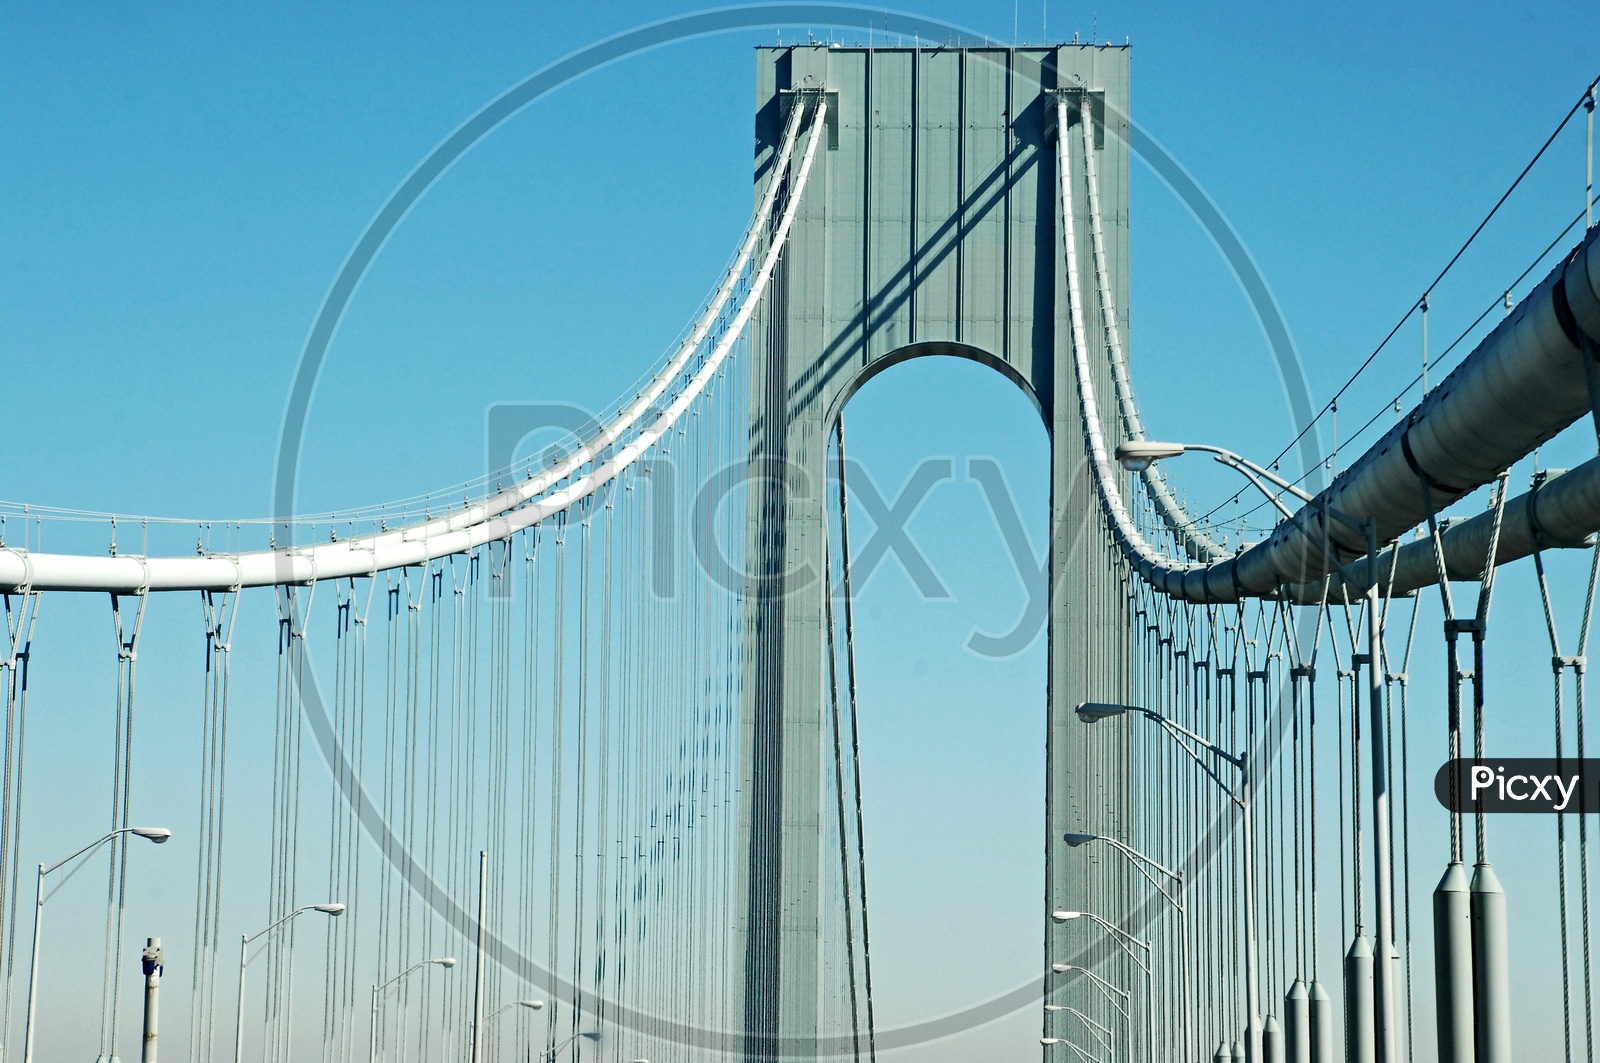 Verrazano Narrow bridge in New York